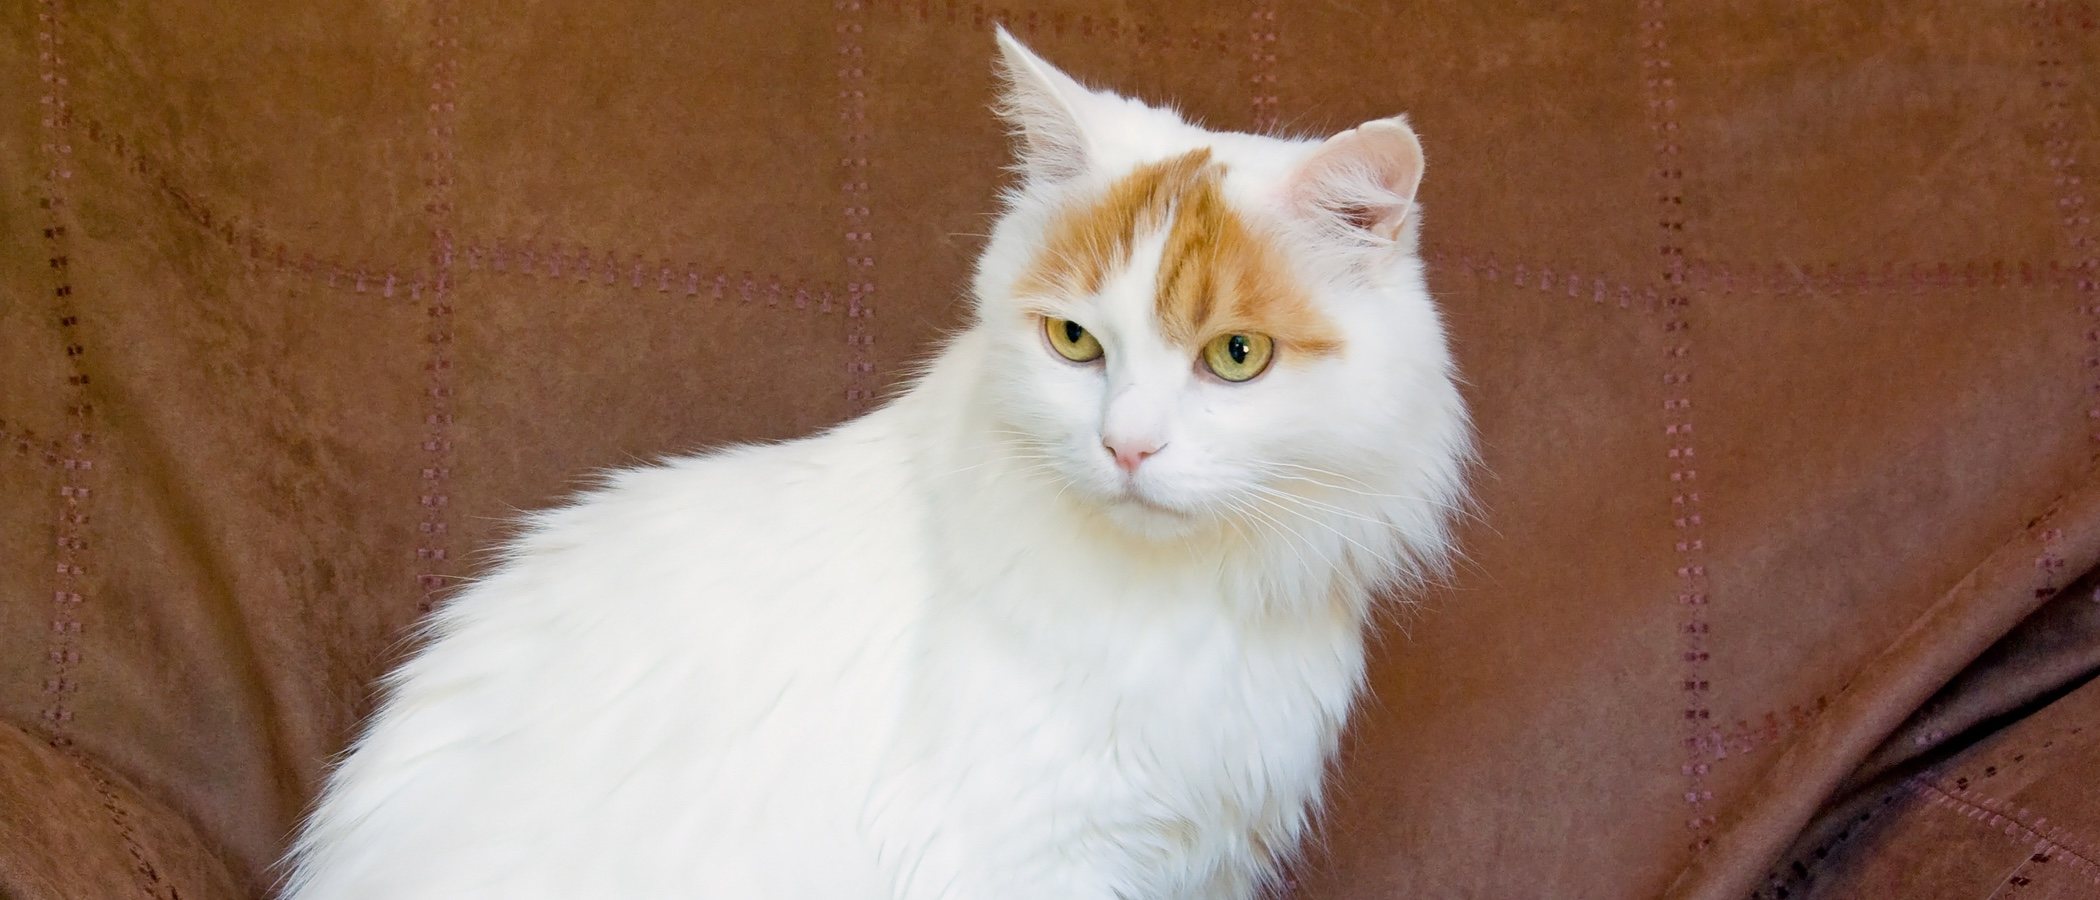 Gato van turco: conoce todo sobre esta raza de felino